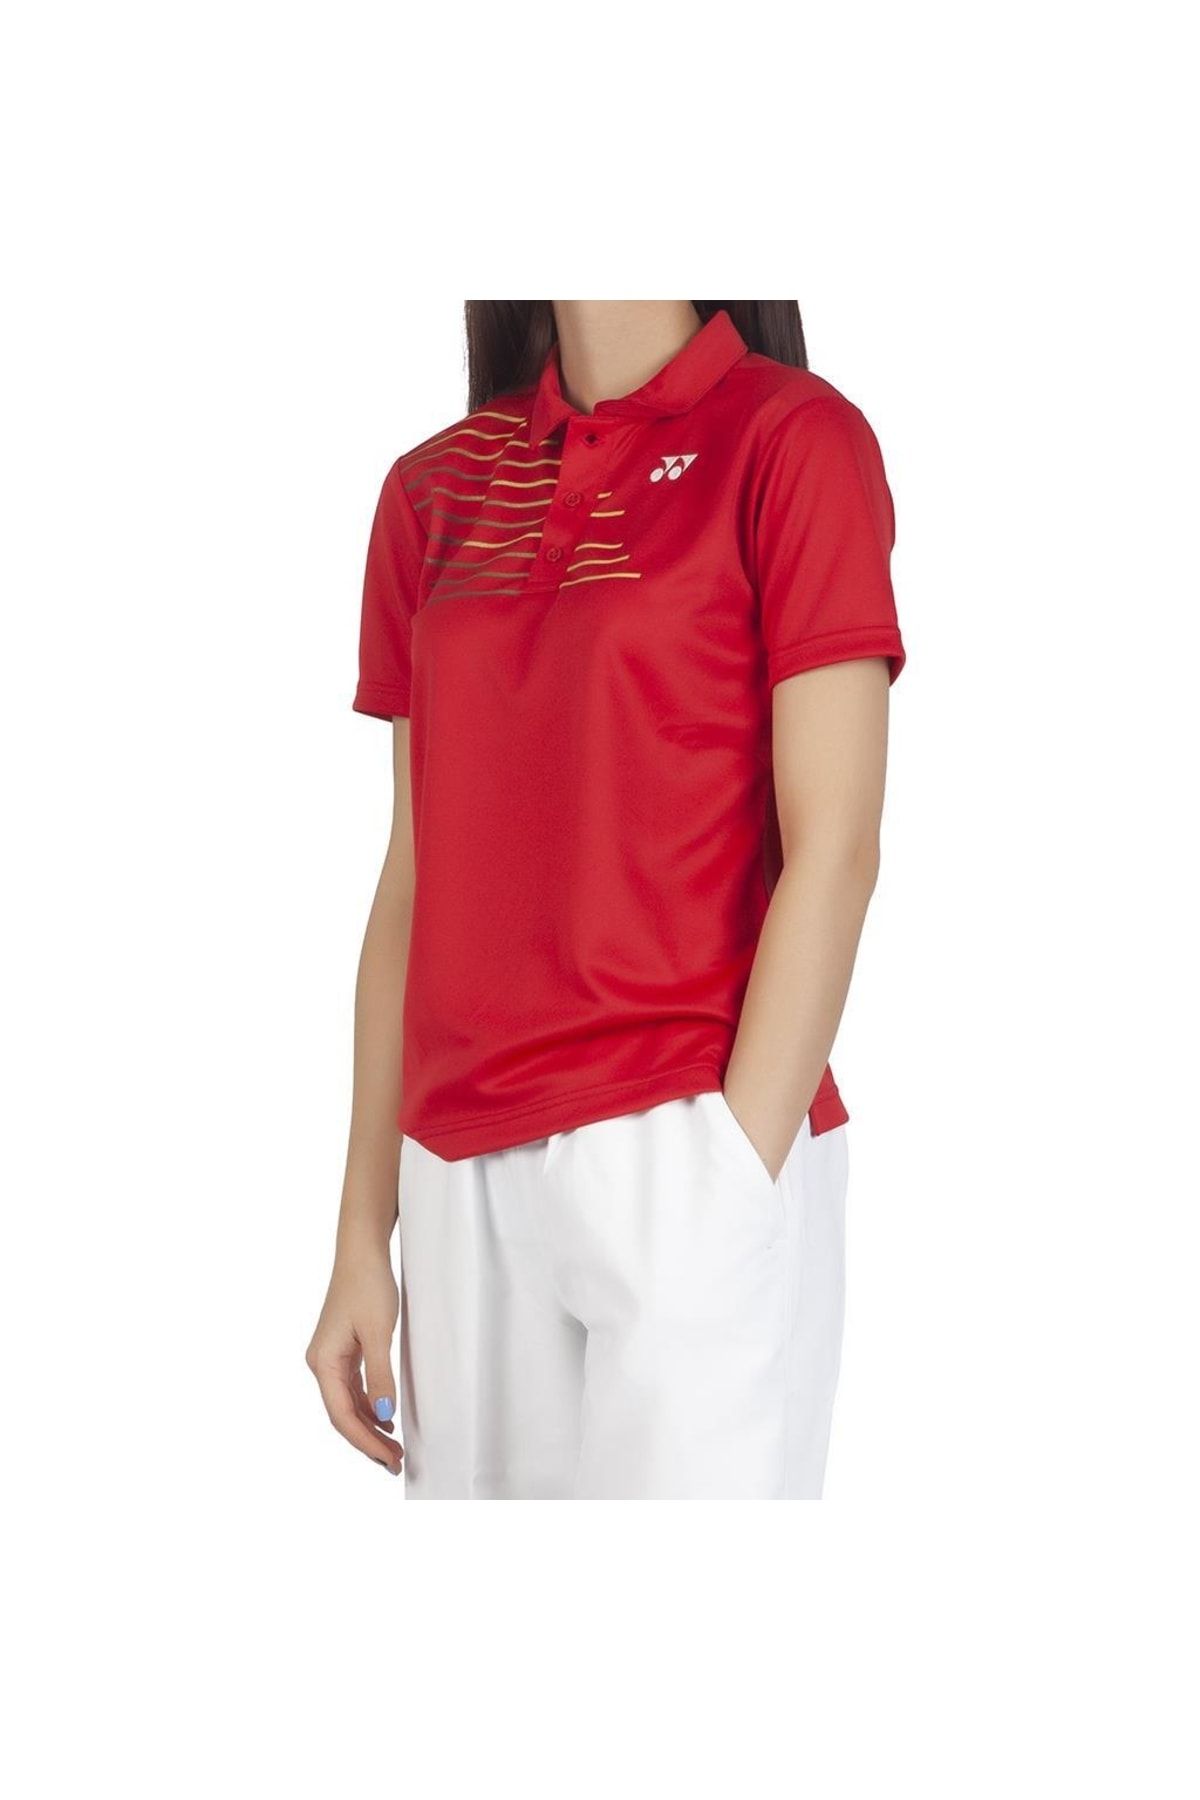 Yonex 12133 Çocuk Kırmızı Tenis Tişörtü